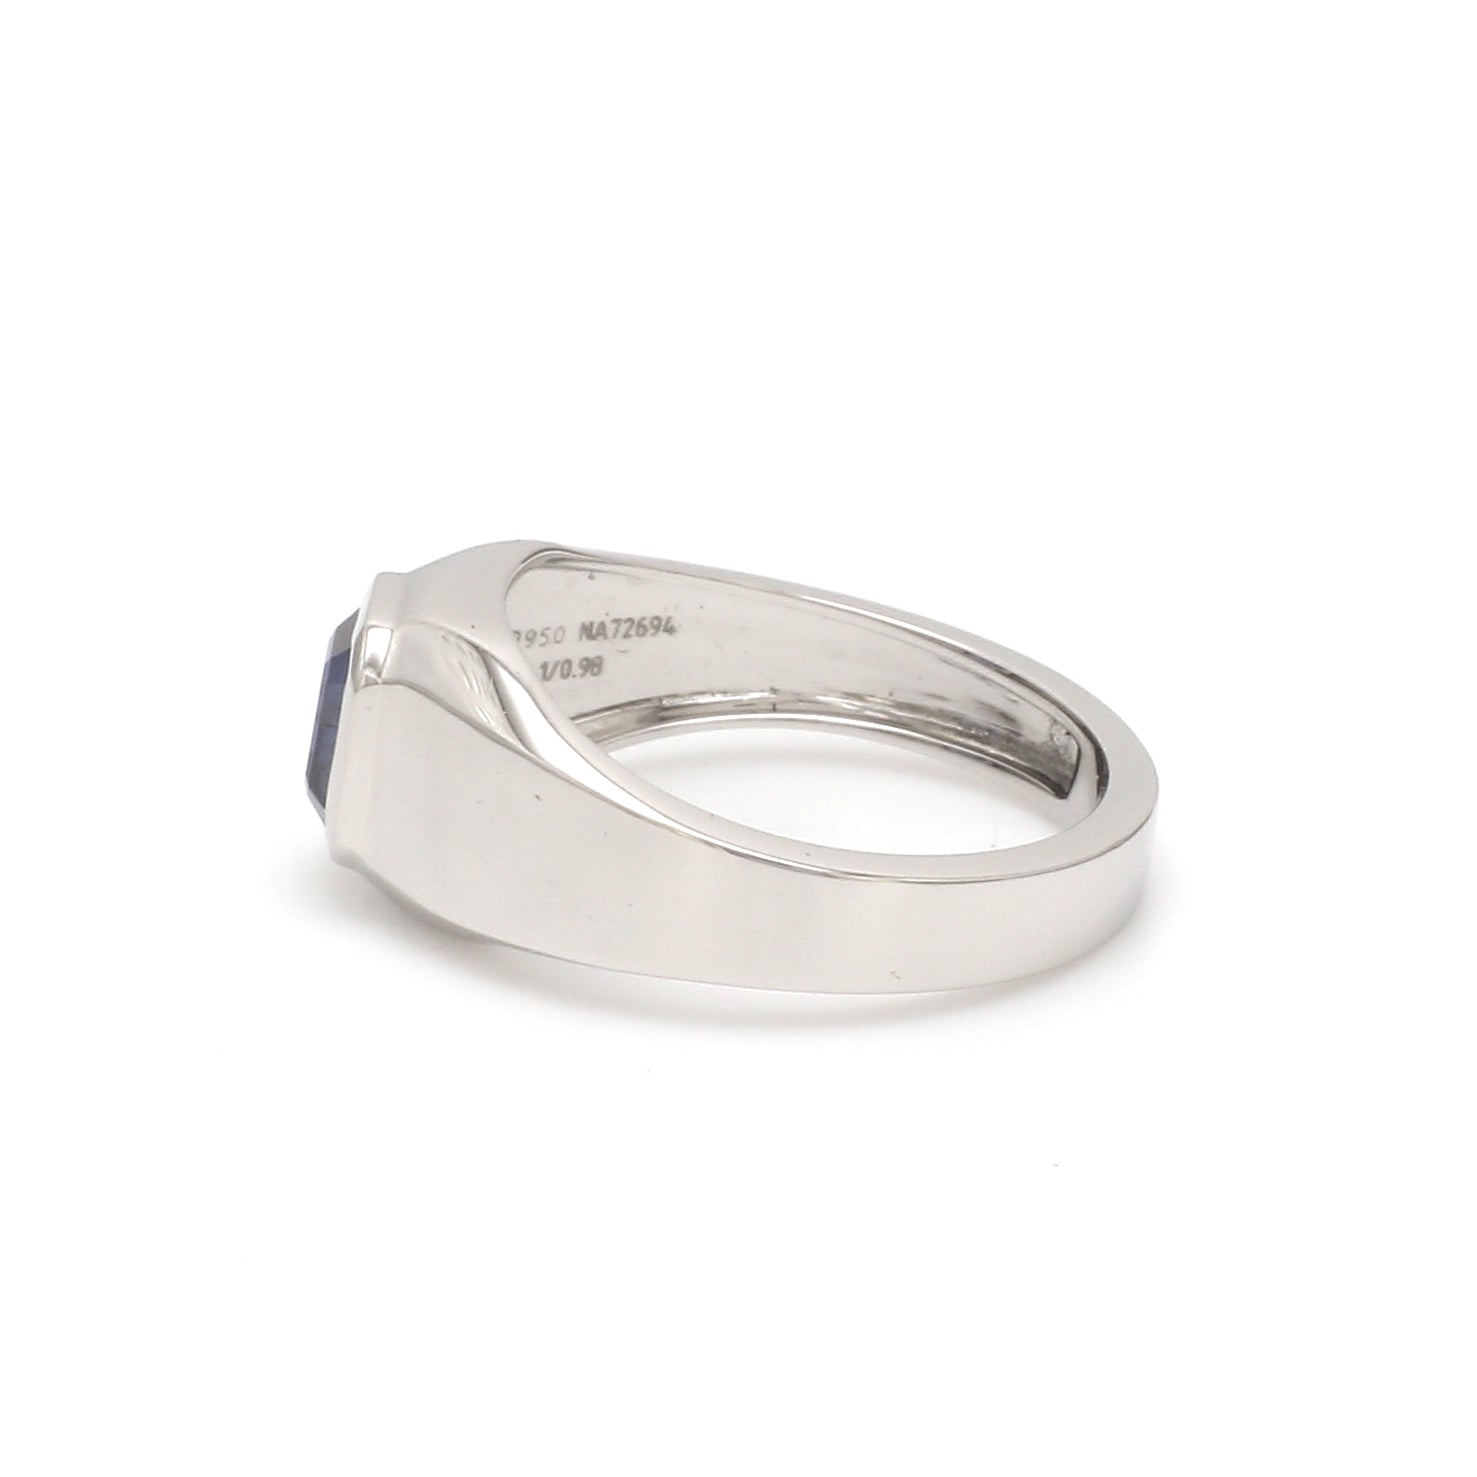 1 Carat Approx  Blue Sapphire Platinum Ring JL PT 1218   Jewelove